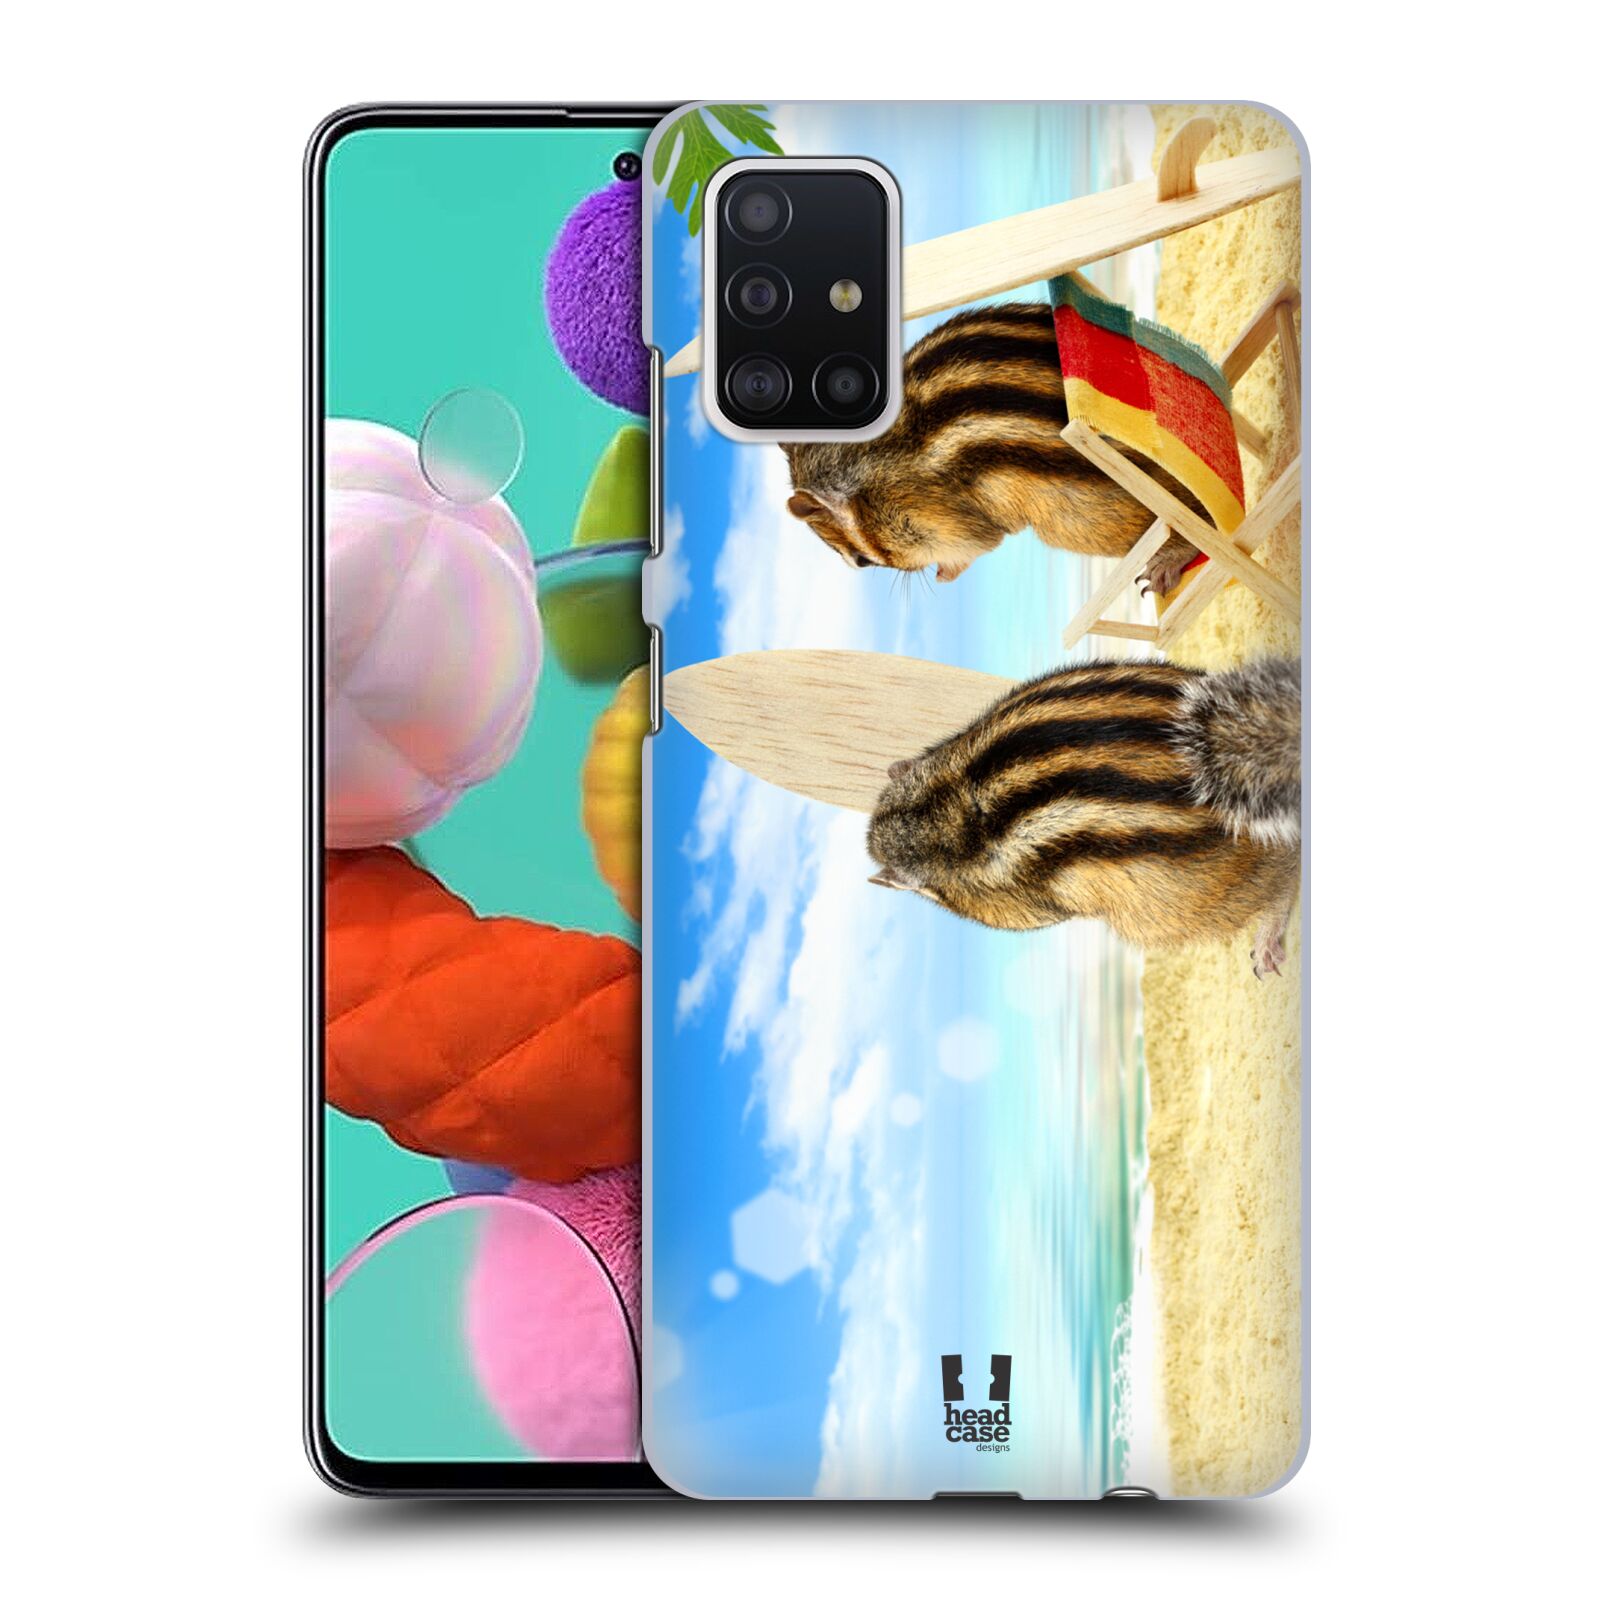 Pouzdro na mobil Samsung Galaxy A51 - HEAD CASE - vzor Legrační zvířátka veverky surfaři u moře